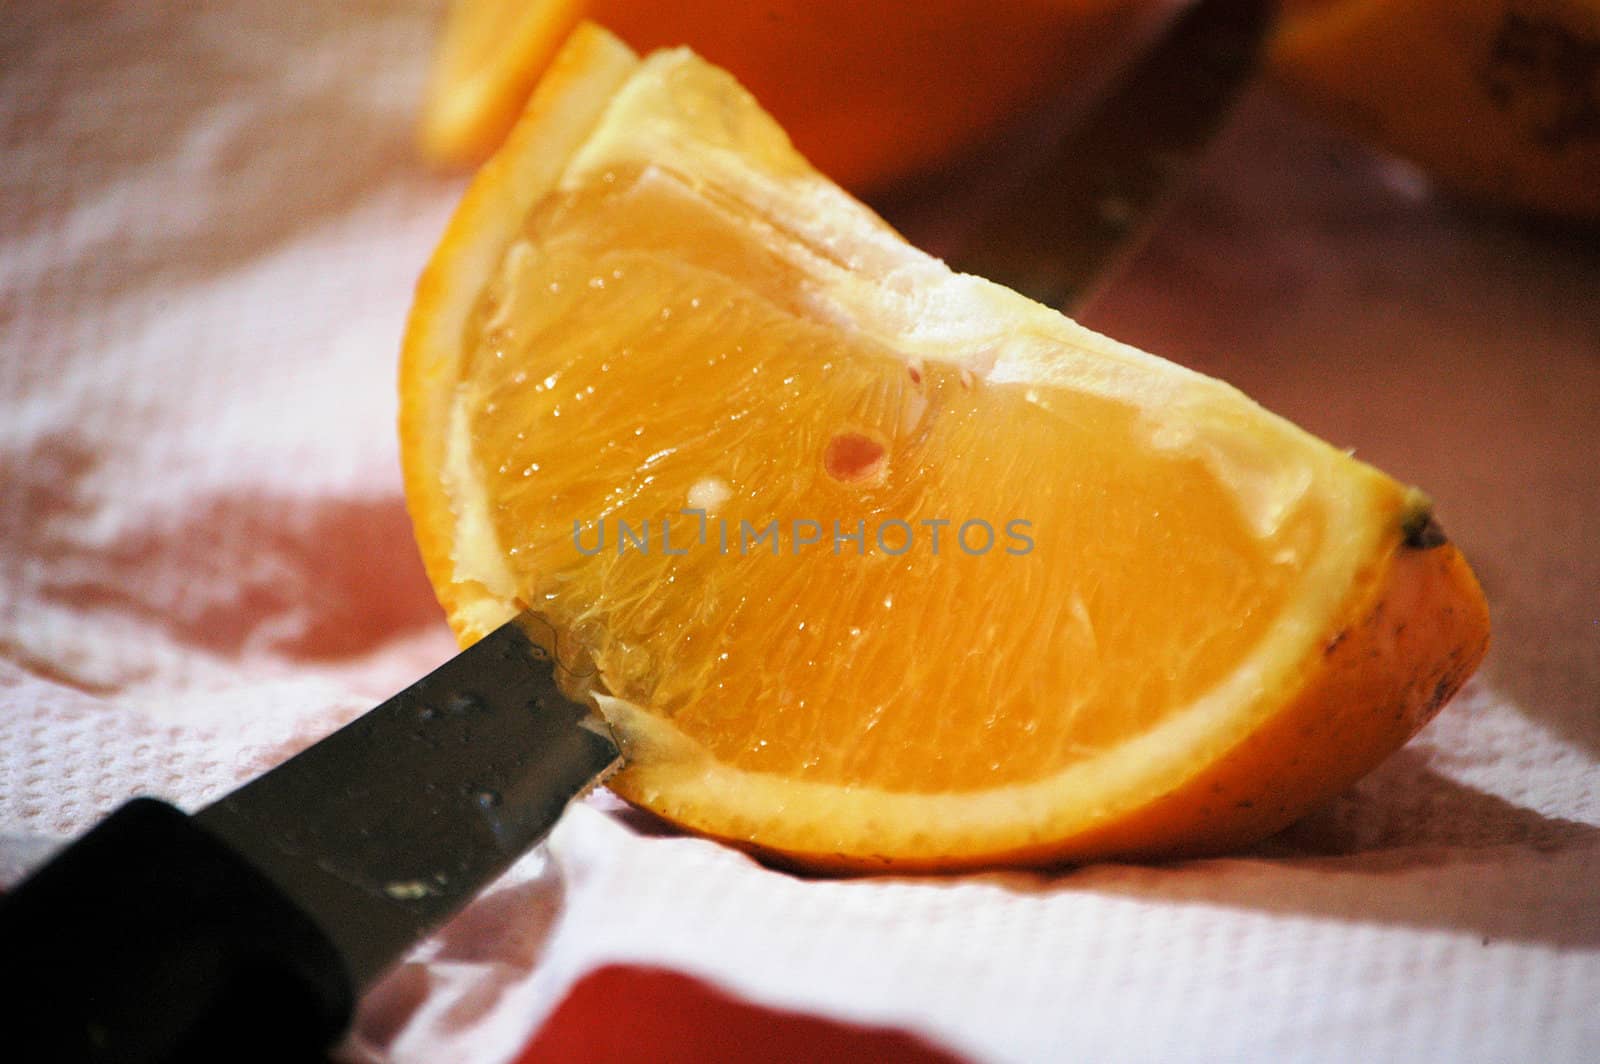 cutting an orange quarter so that it can be eaten